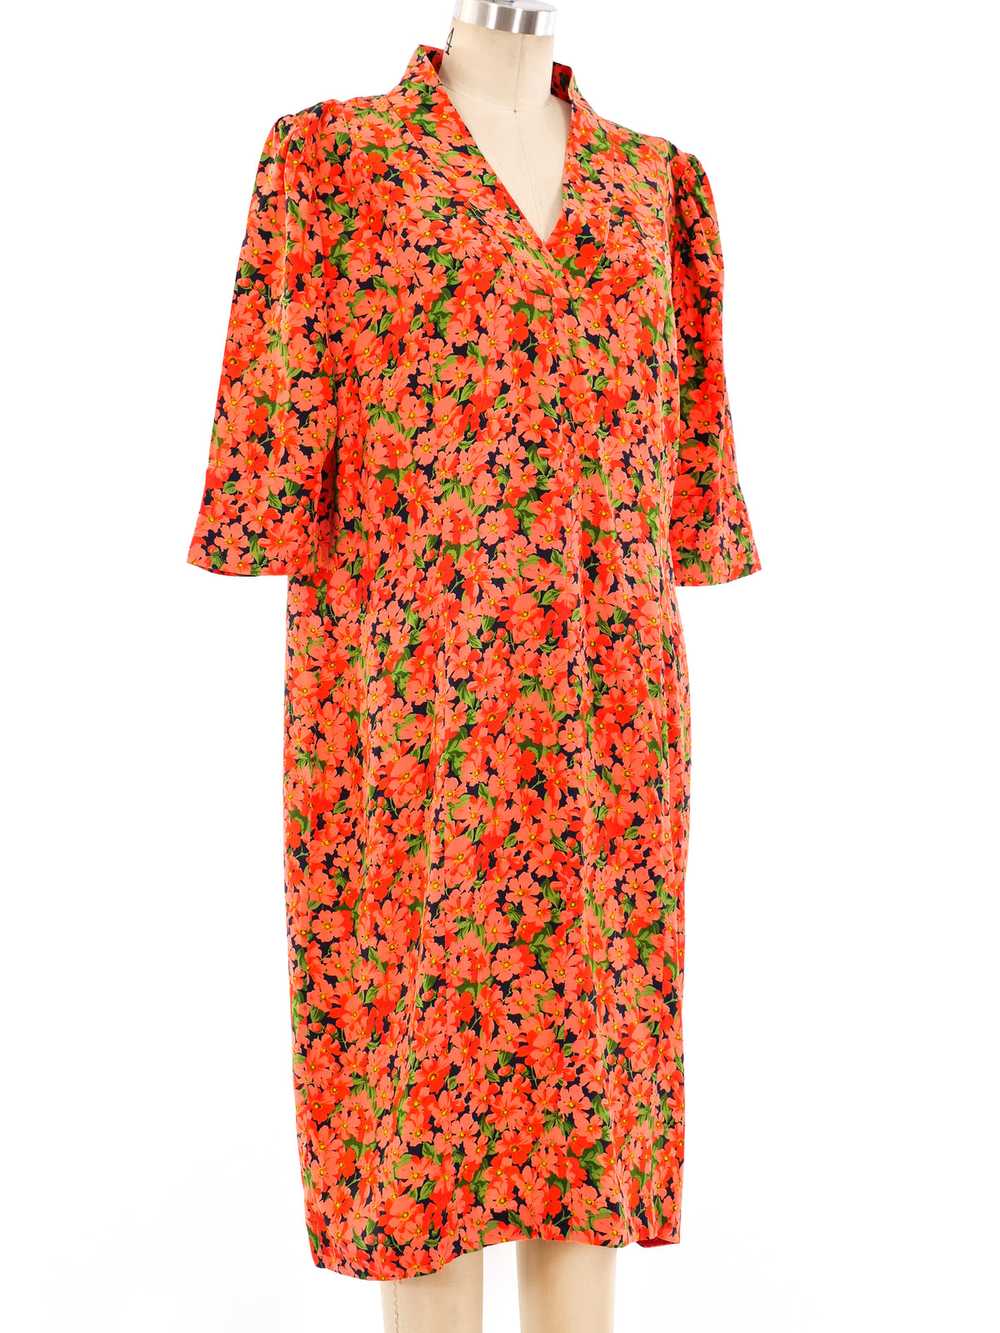 Yves Saint Laurent Floral Silk Dress - image 3